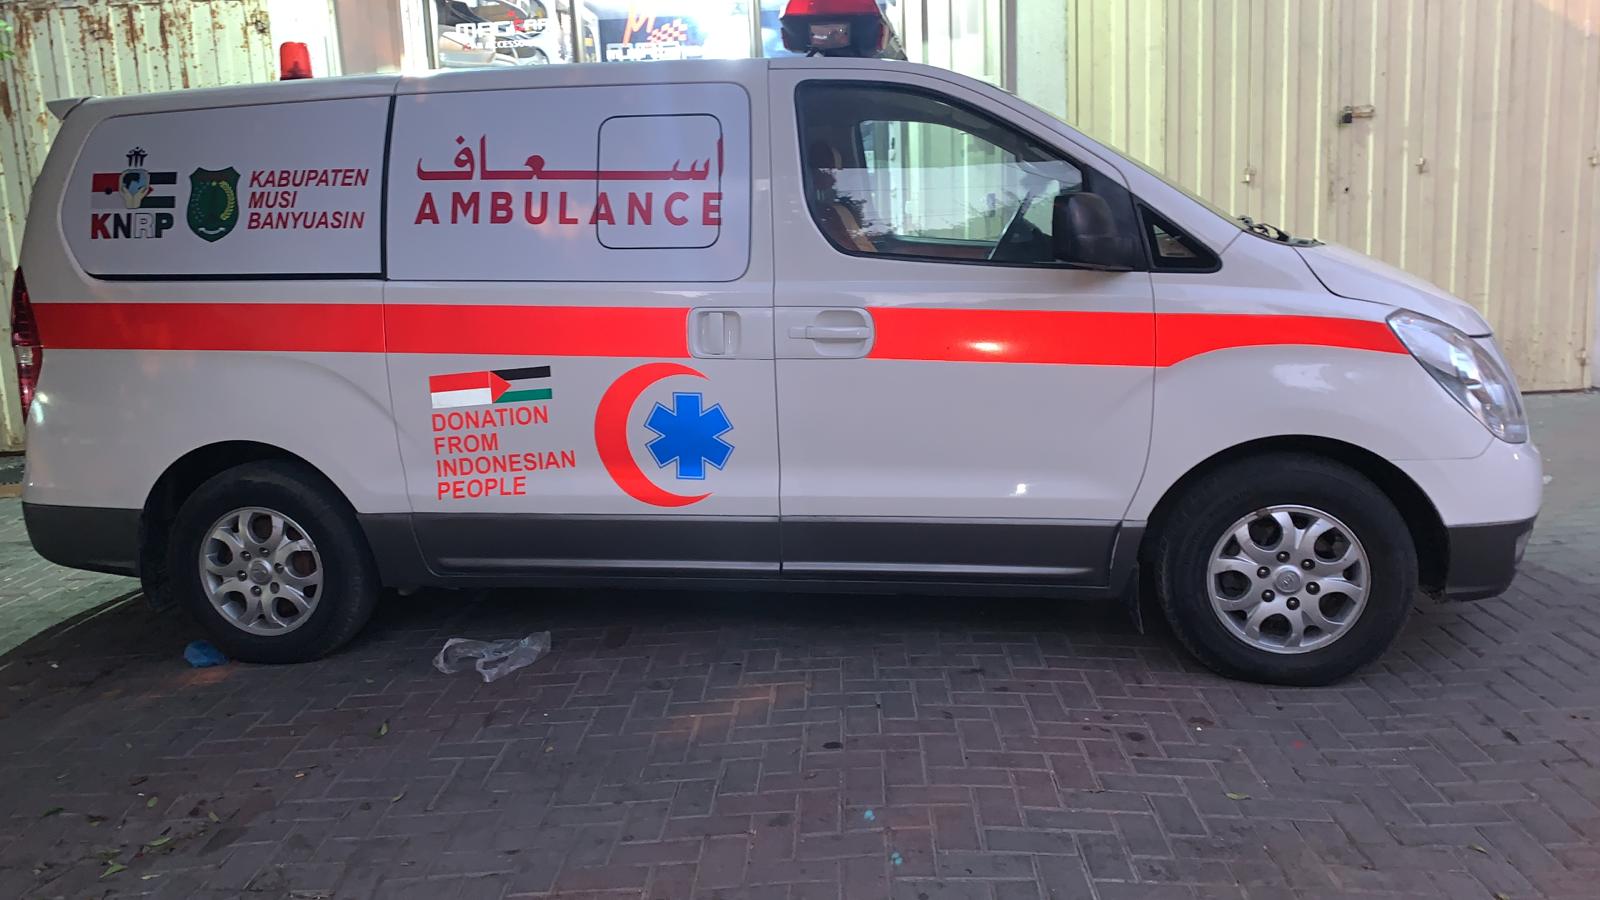 KNRP : Terima kasih Muba, Ambulance Untuk Palestina Sangat Bermanfaat